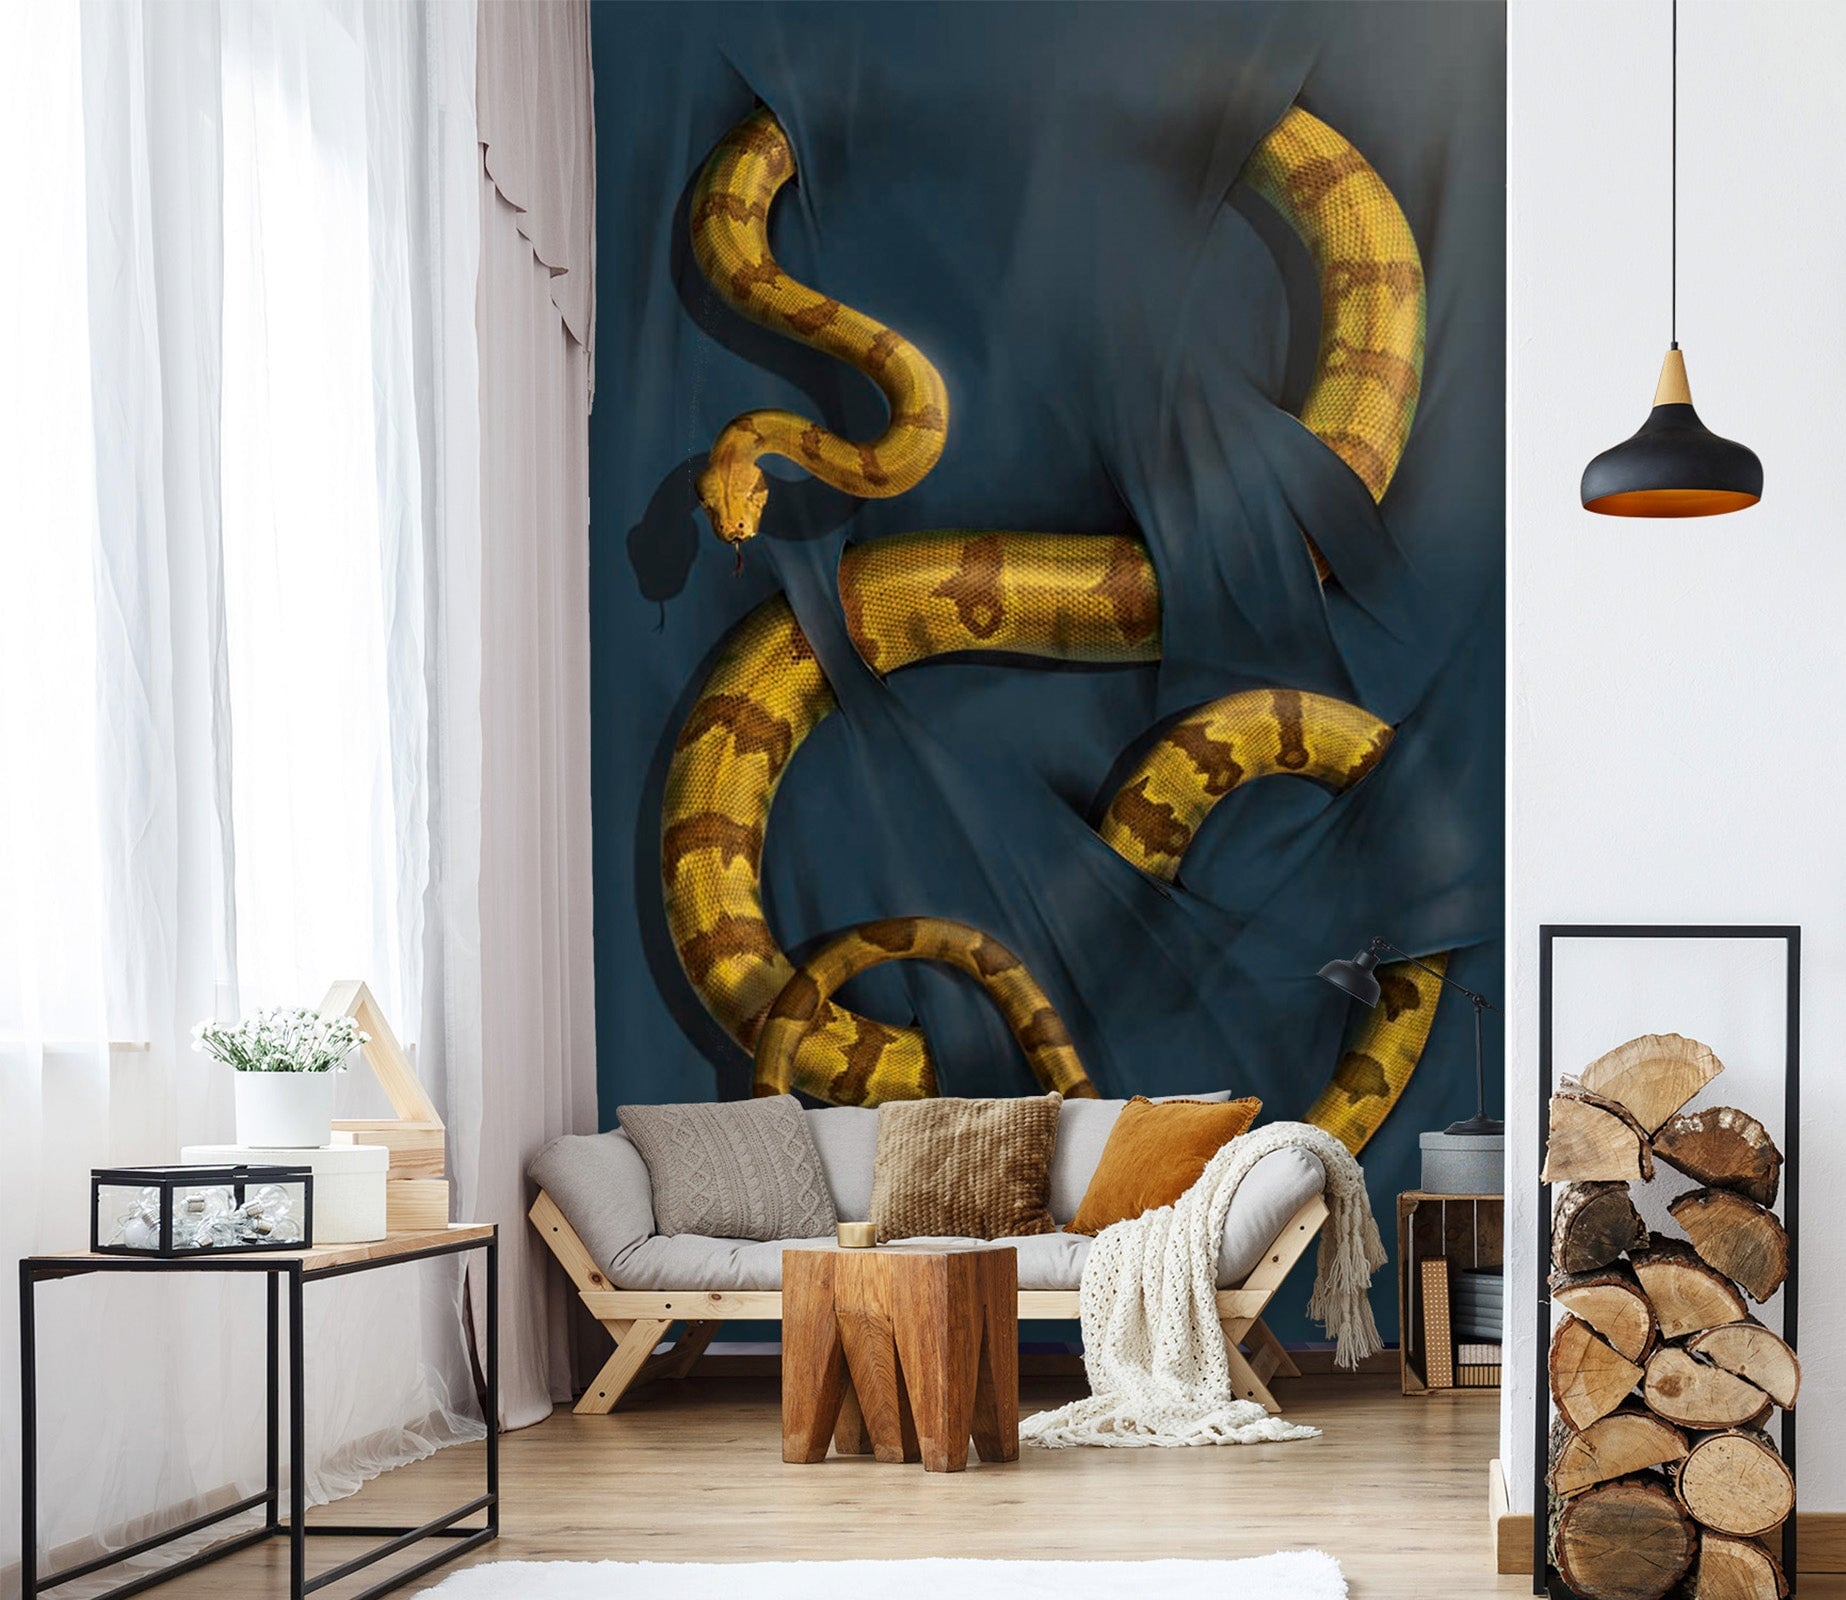 3D Gold Python 1414 Wall Murals Exclusive Designer Vincent Wallpaper AJ Wallpaper 